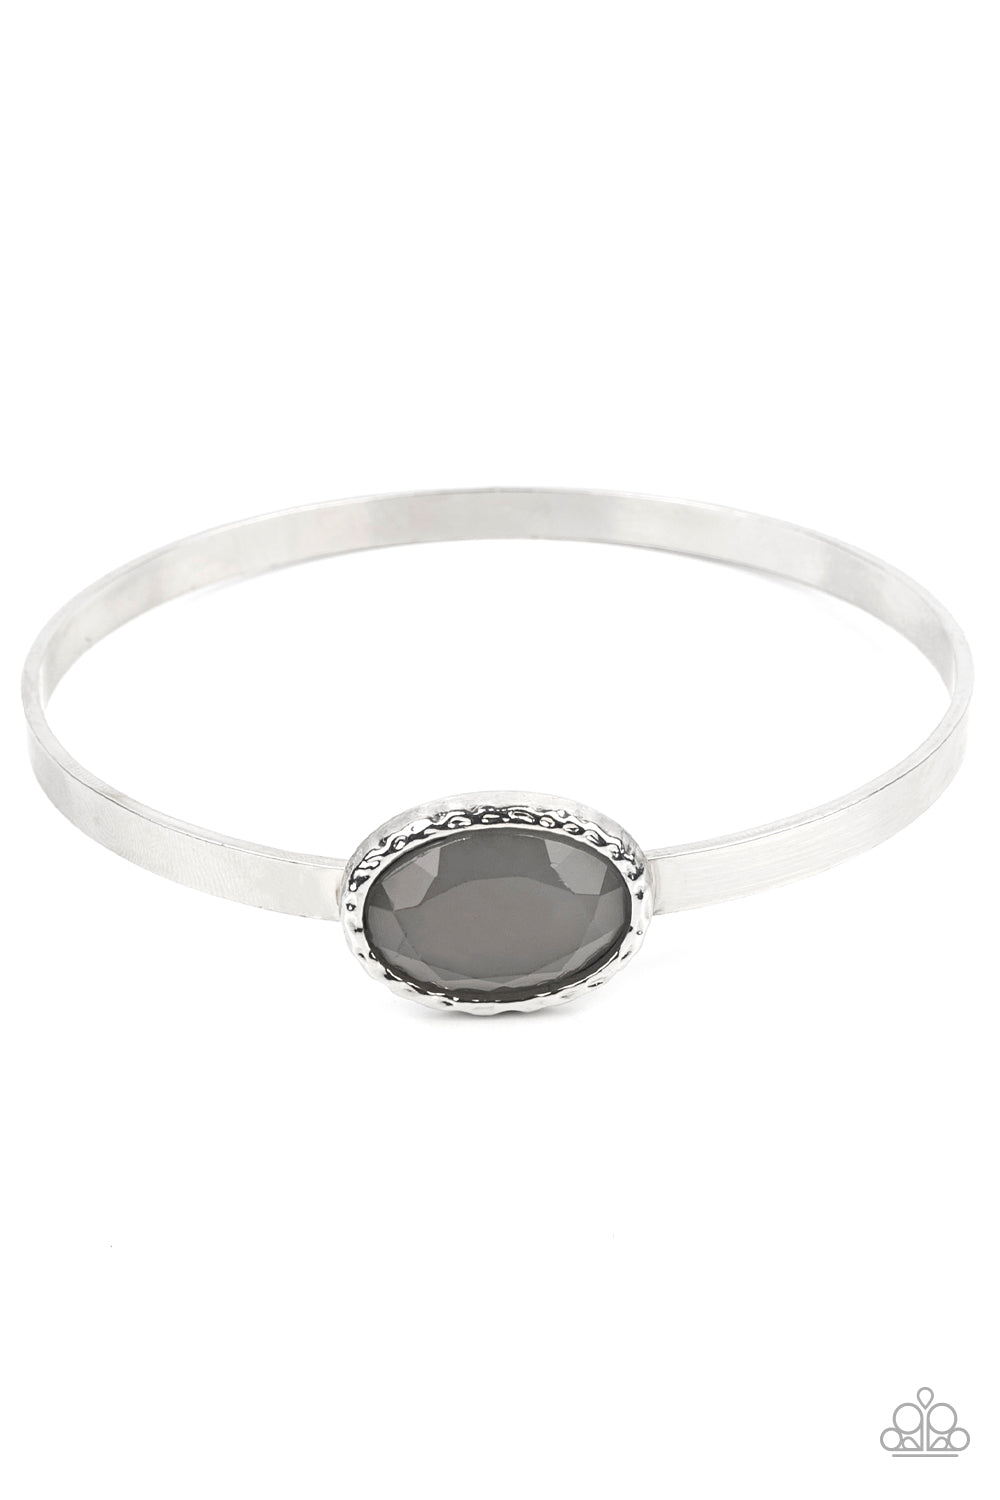 Misty Meadow - Silver Paparazzi Bracelet